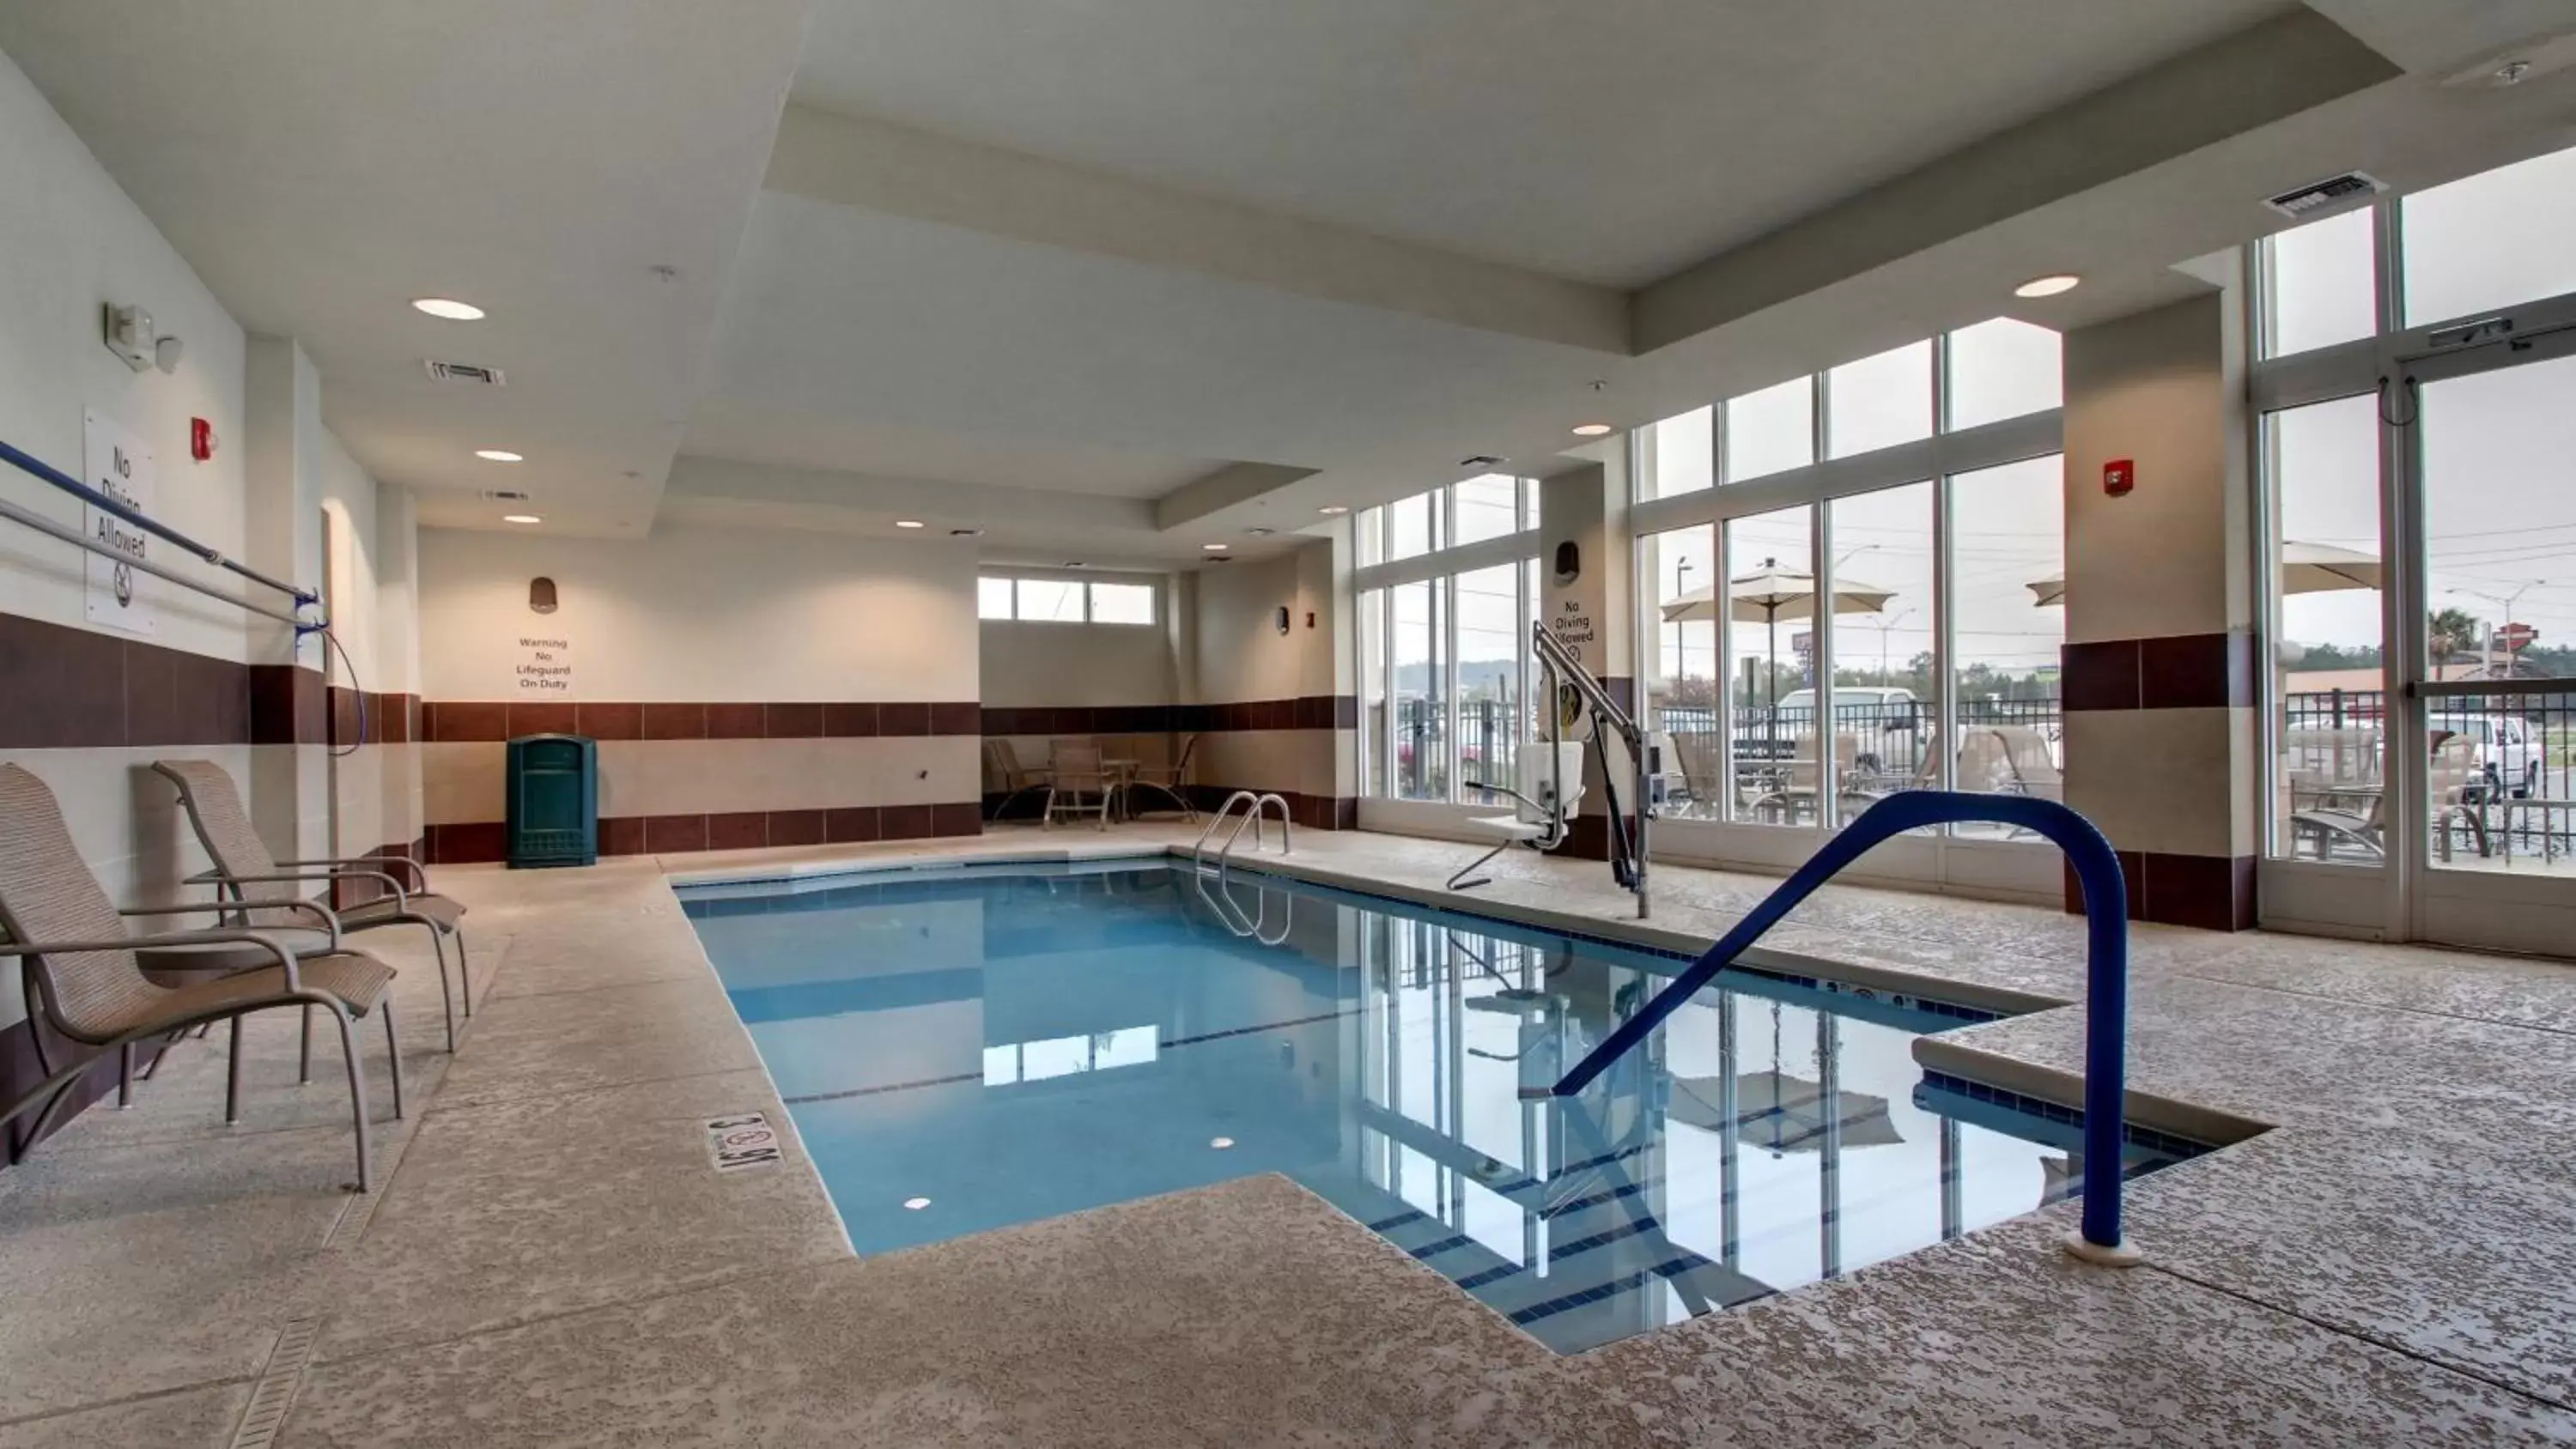 Swimming Pool in Holiday Inn Meridian East I 59 / I 20